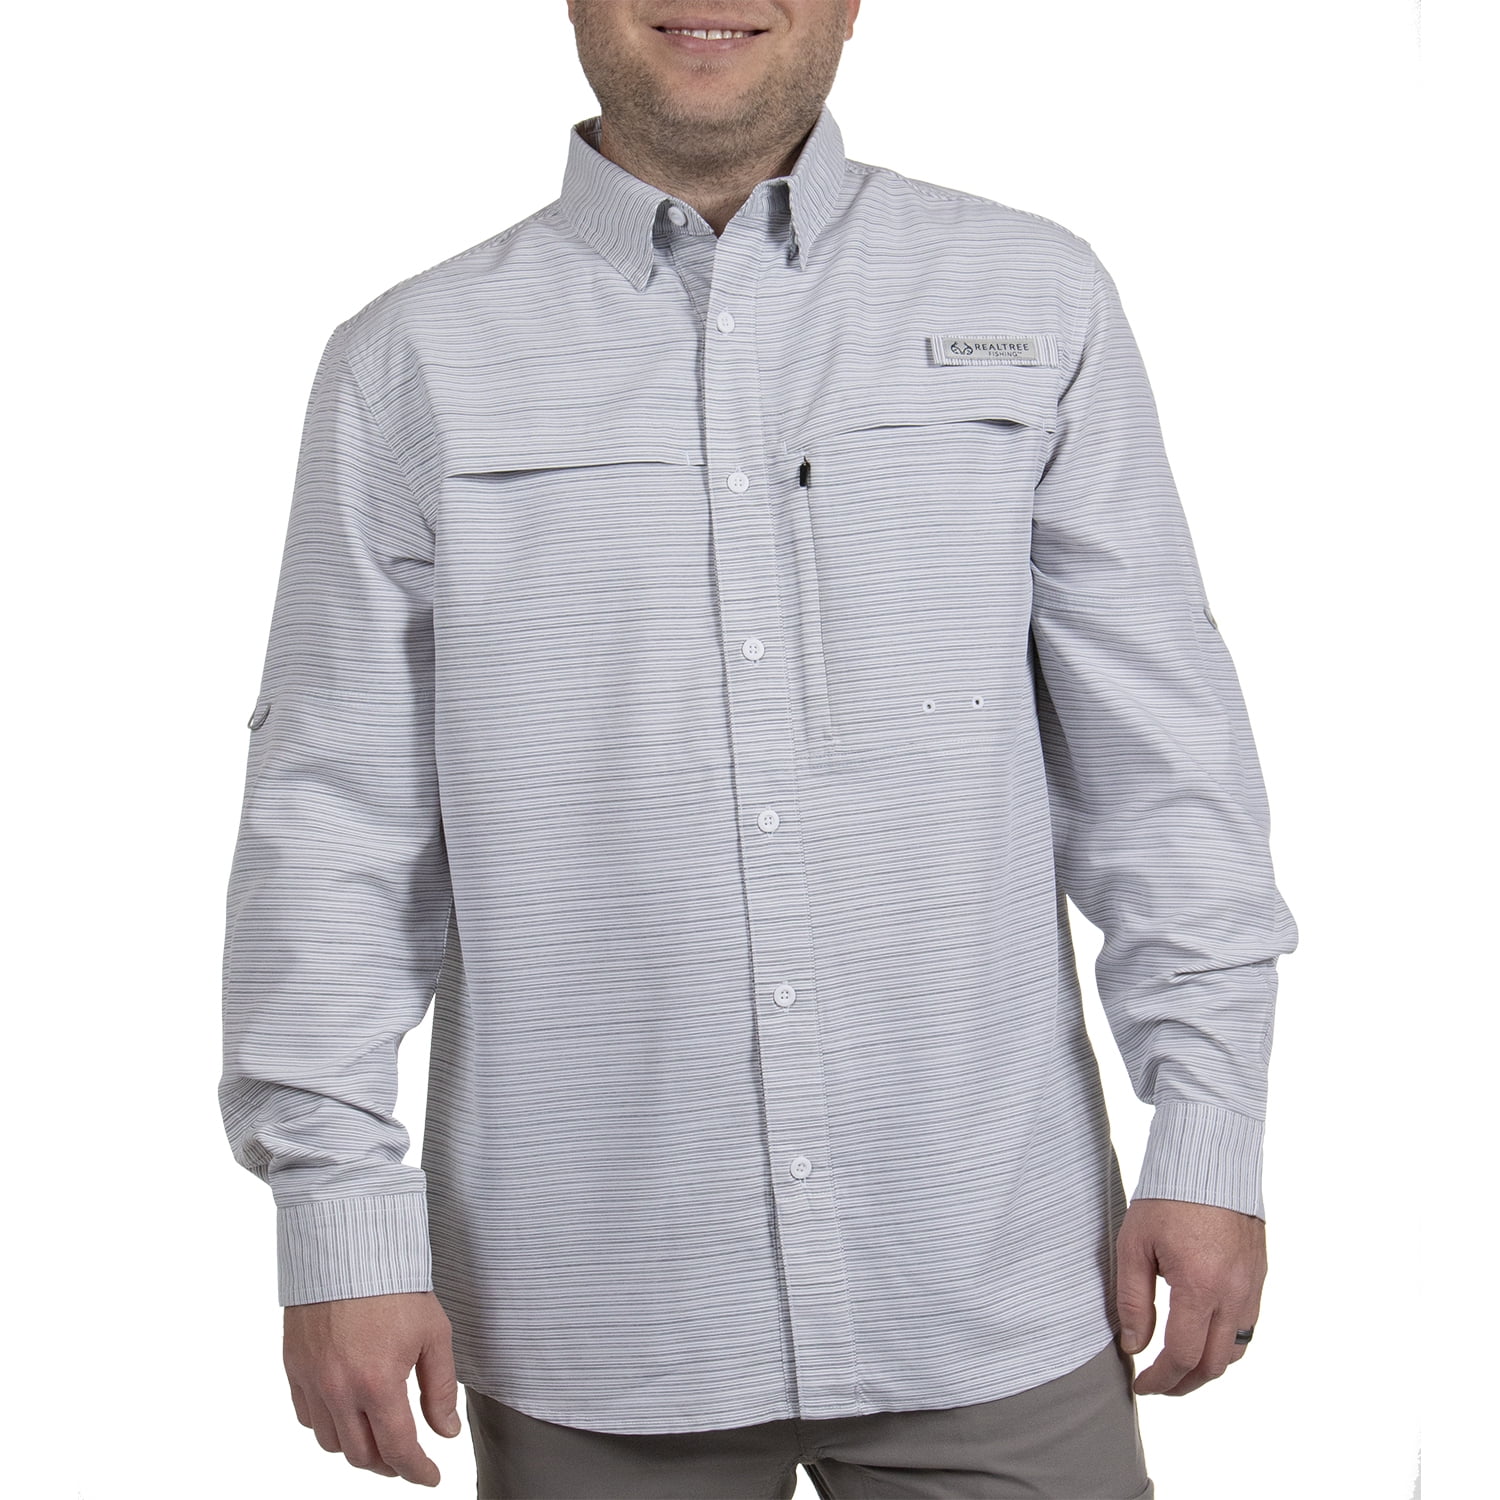 Realtree Long Sleeve Fishing Guide Shirt, Gray Stripe, Size Small